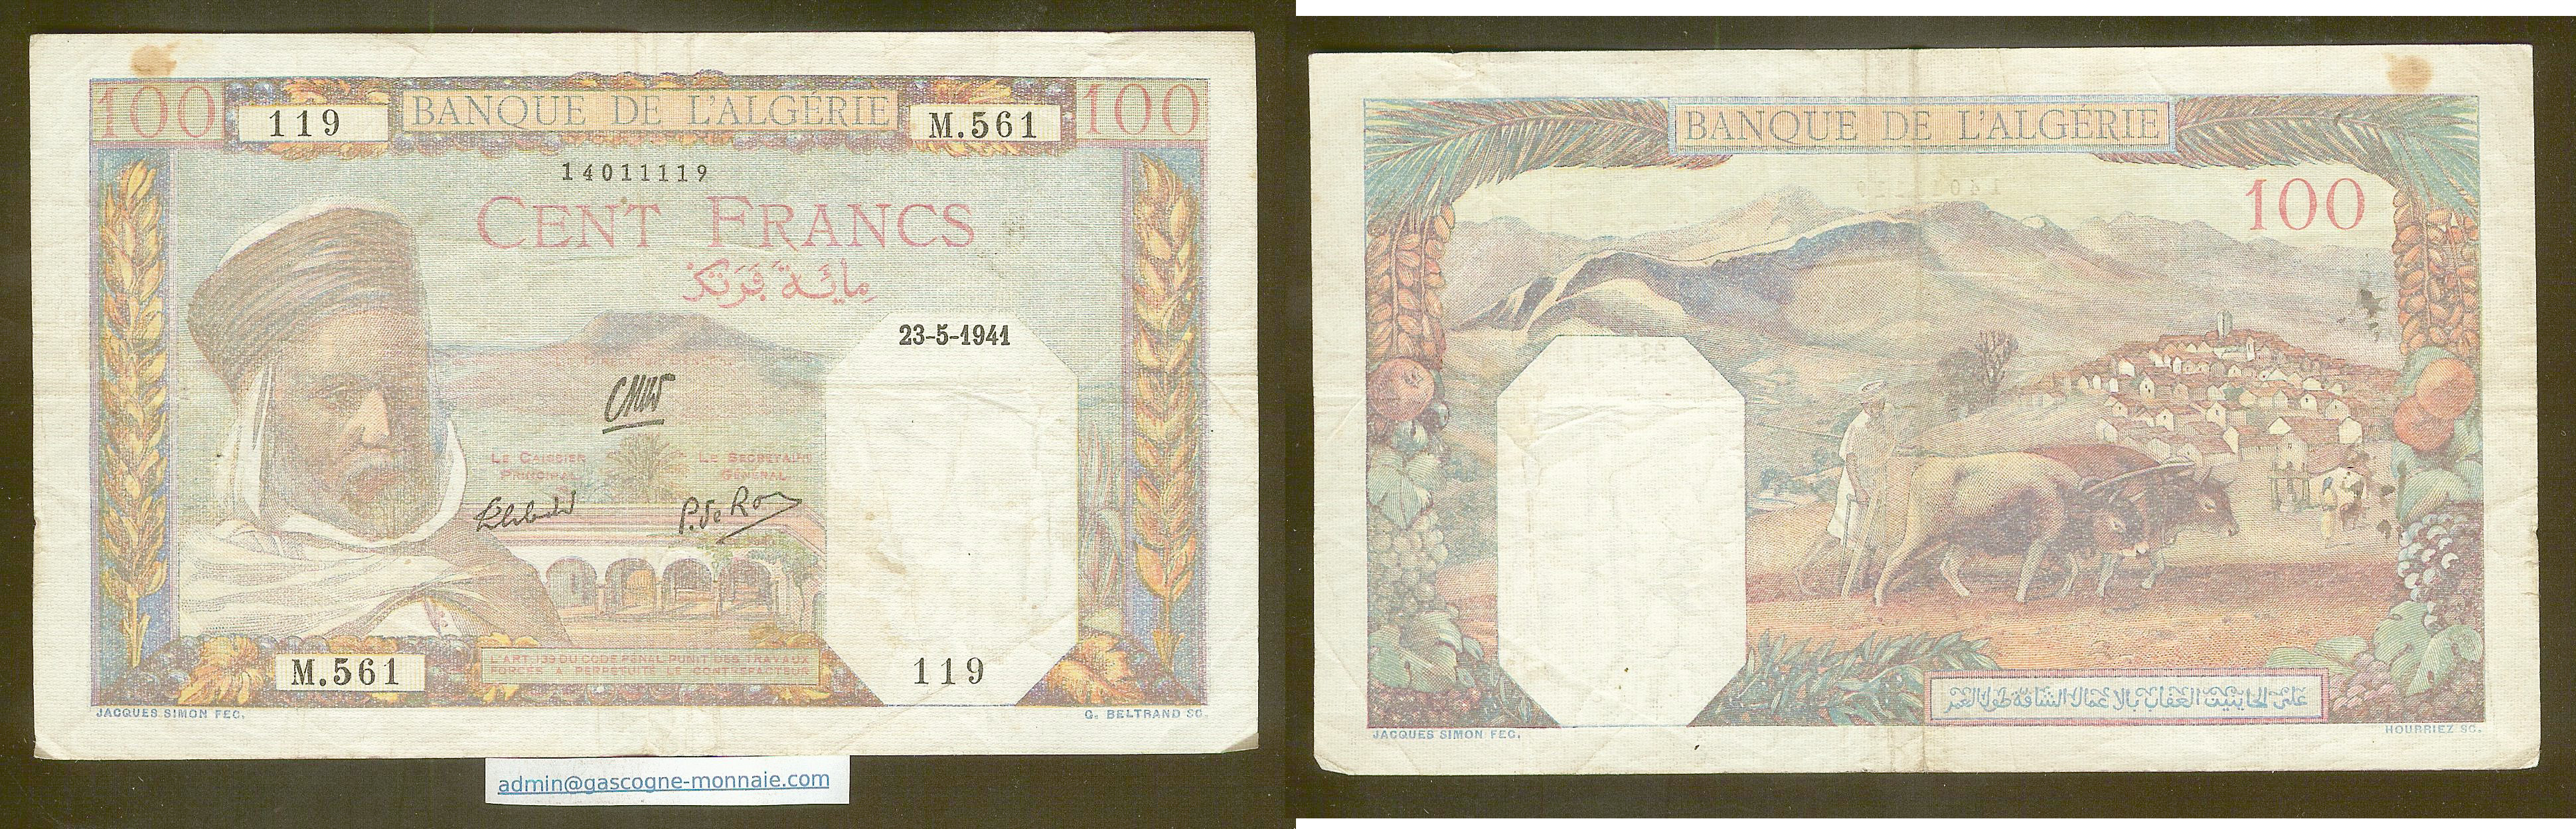 Algeria 100 francs 23.05.1941 VF+